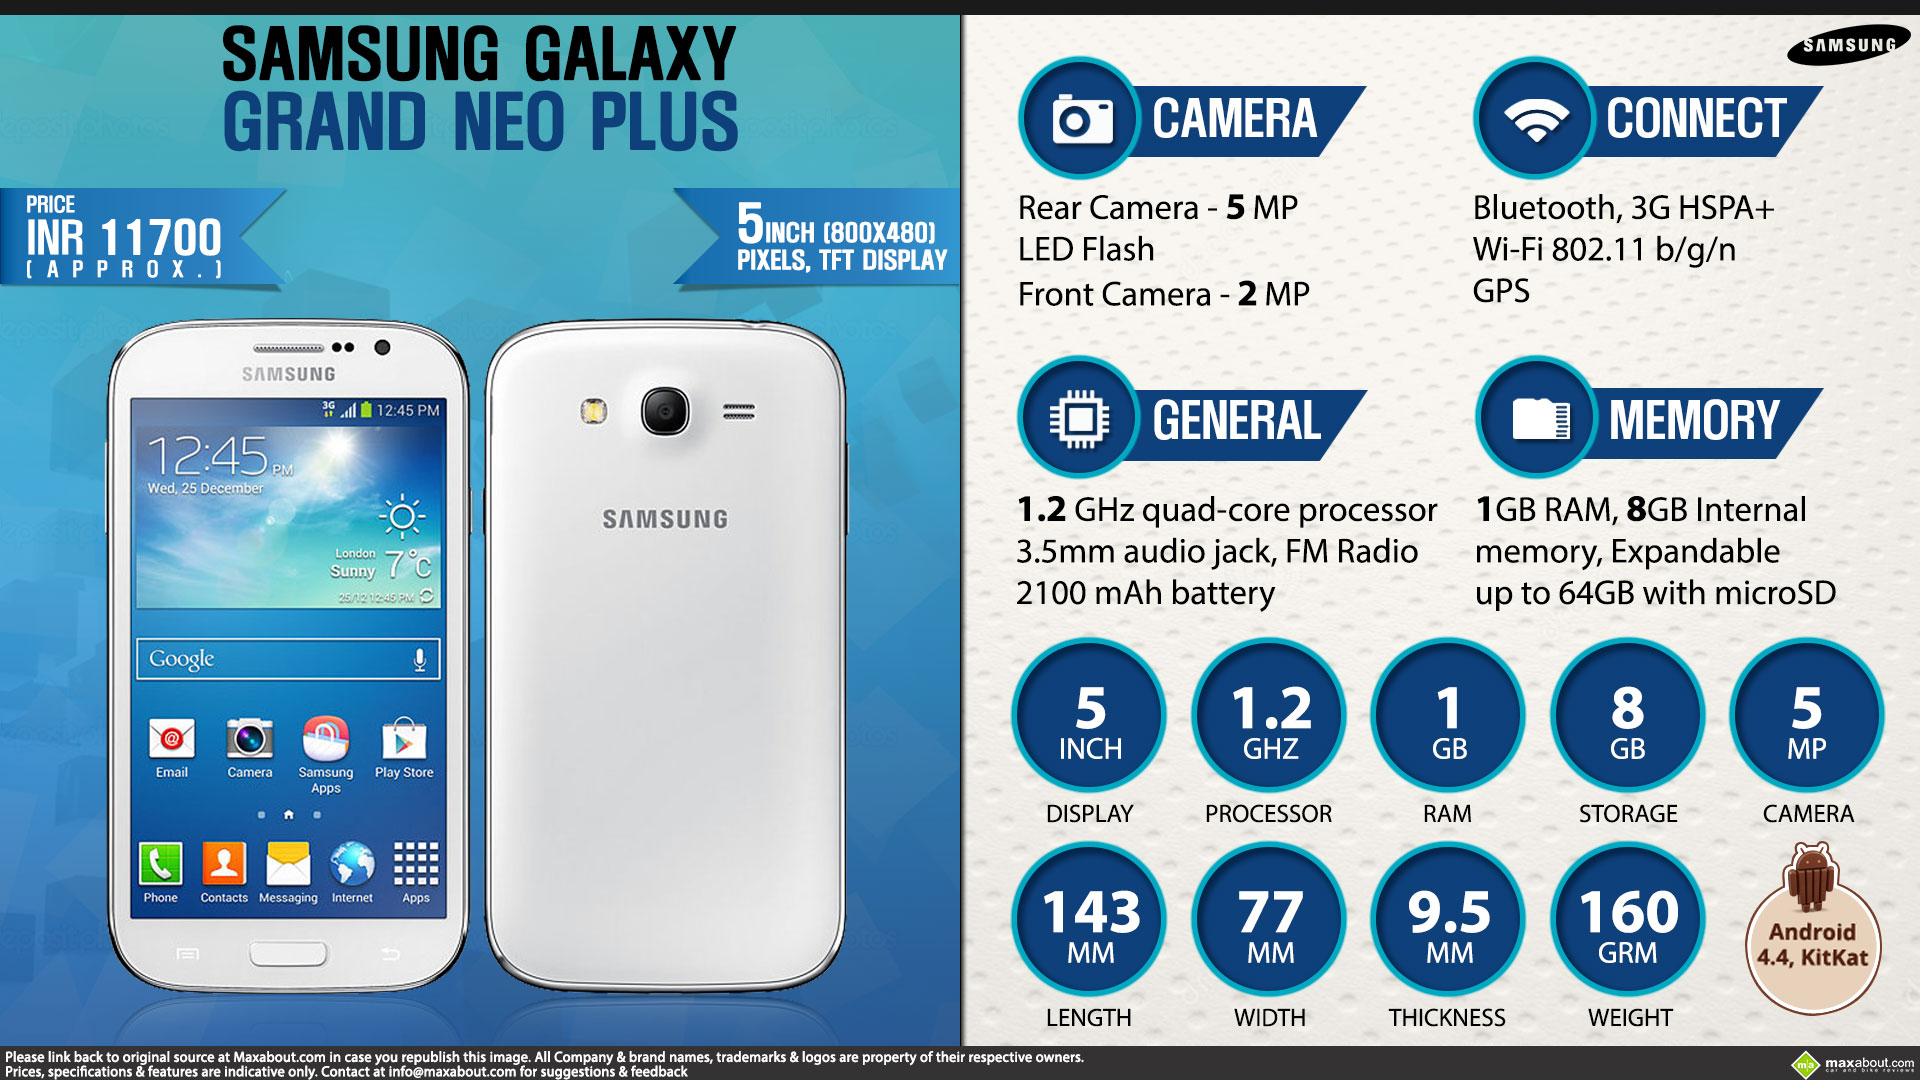 Quick Facts - Samsung Galaxy Grand Neo Plus